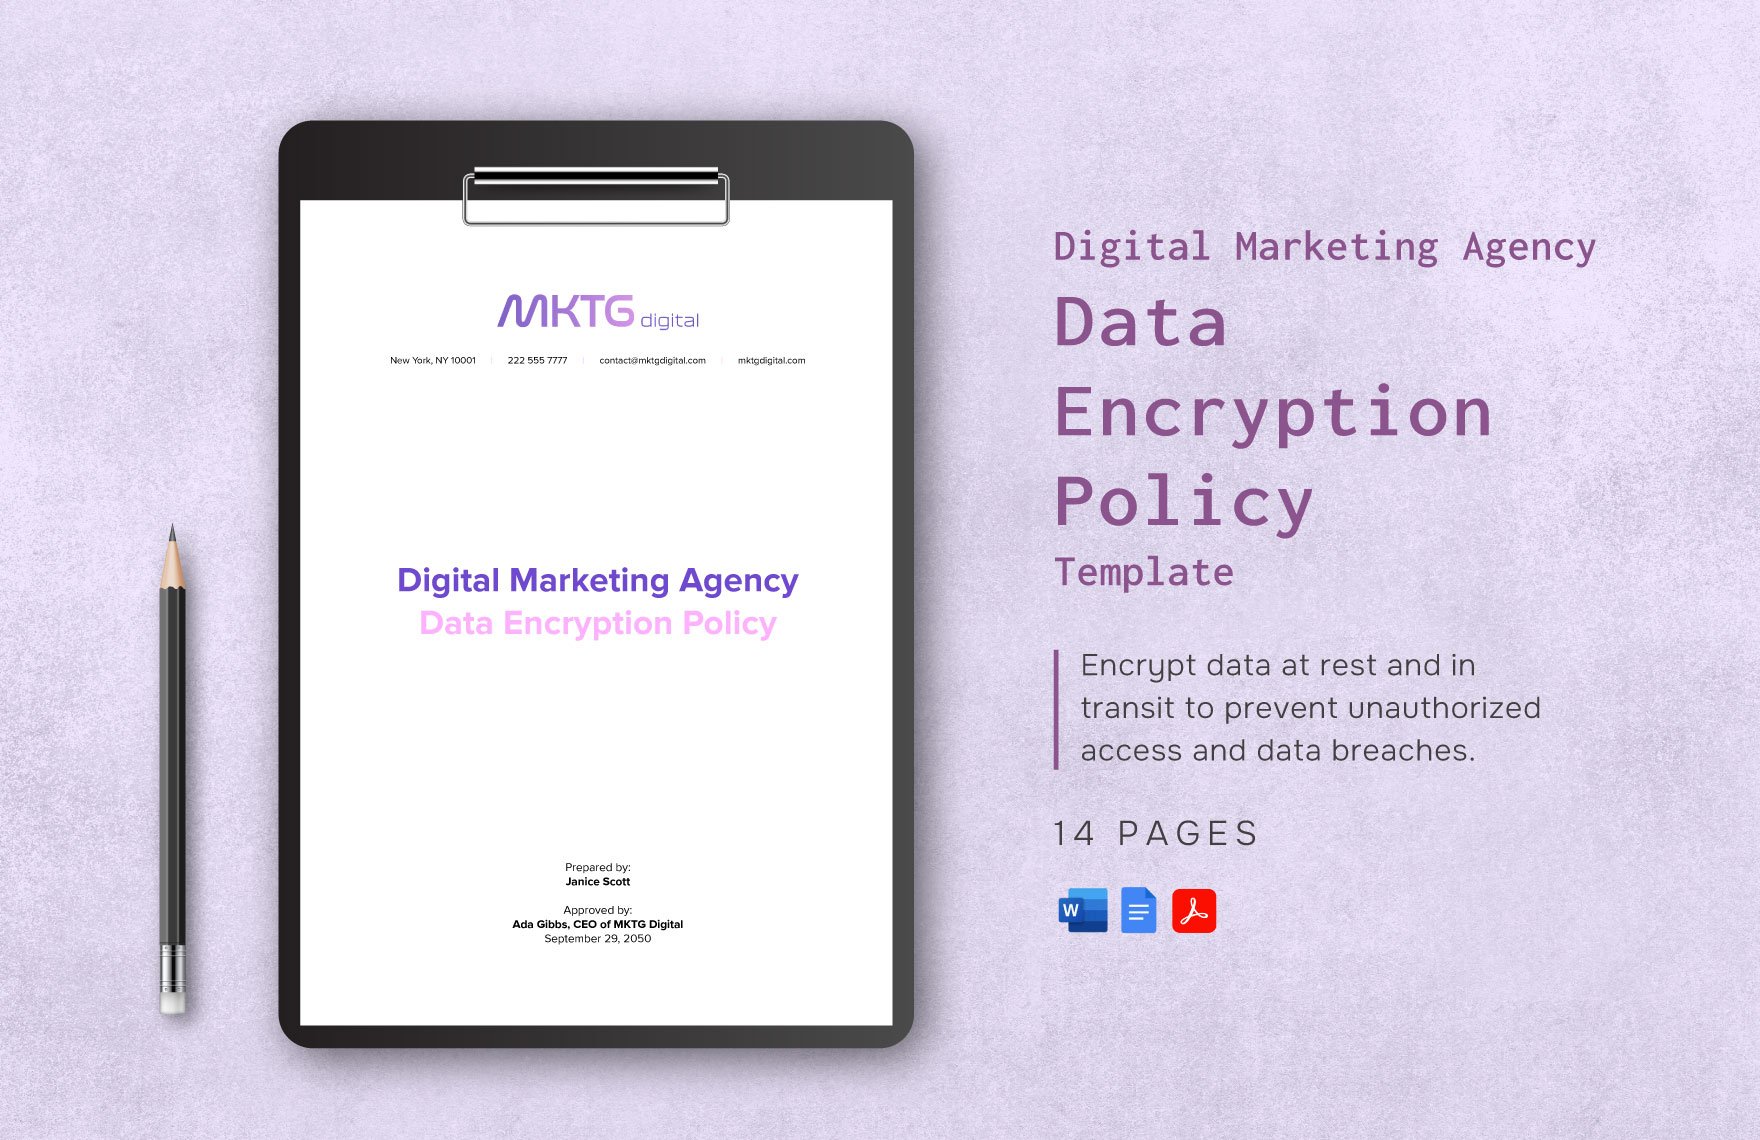 Digital Marketing Agency Data Encryption Policy Template